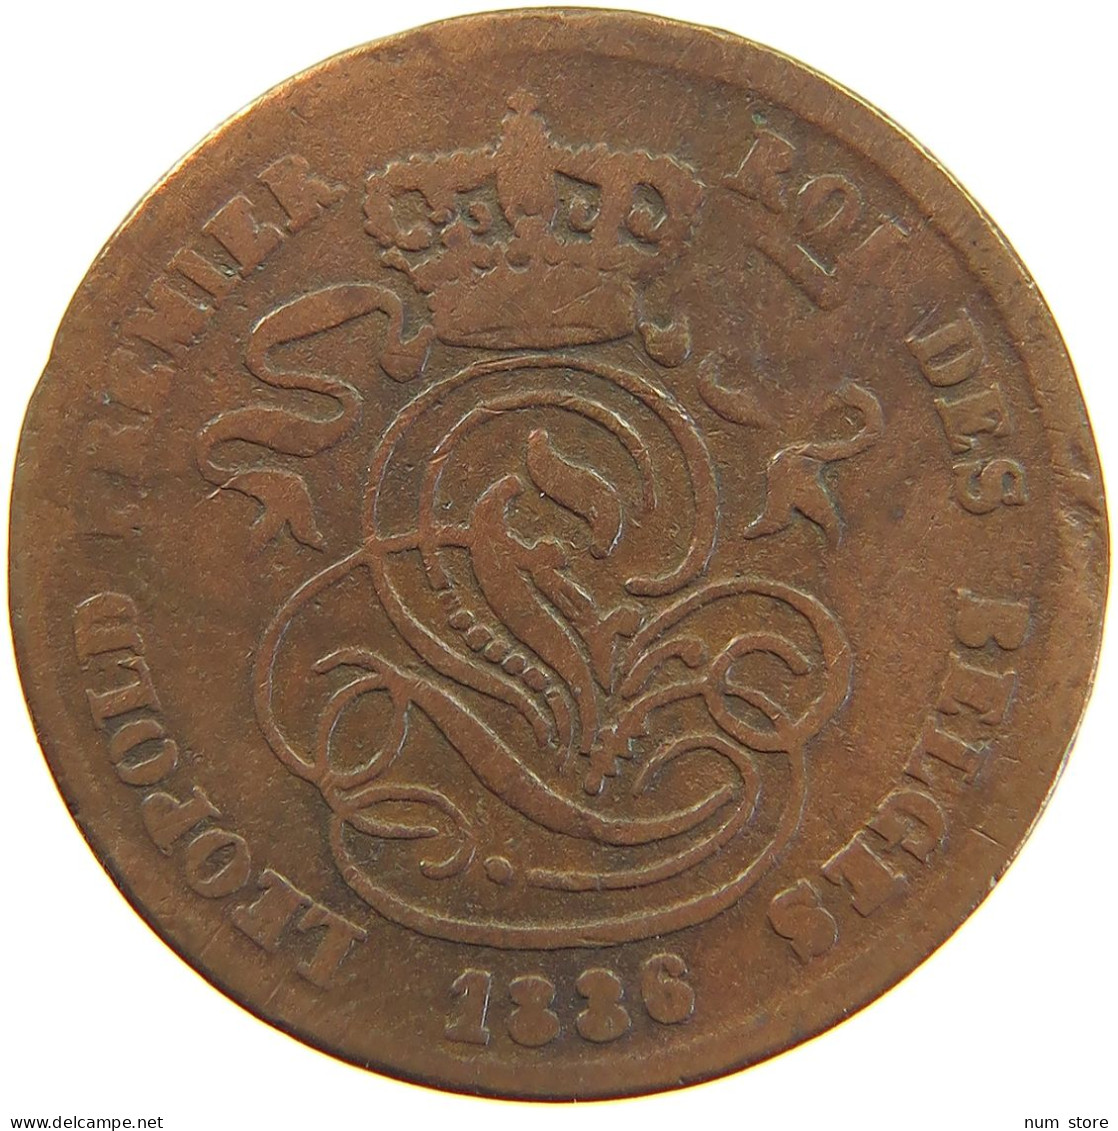 BELGIUM 2 CENTIMES 1836 Leopold I. (1831-1865) 2 CENTIMES 1835 STRUCK OVER NETHERLANDS CENT #c050 0423 - 2 Centimes